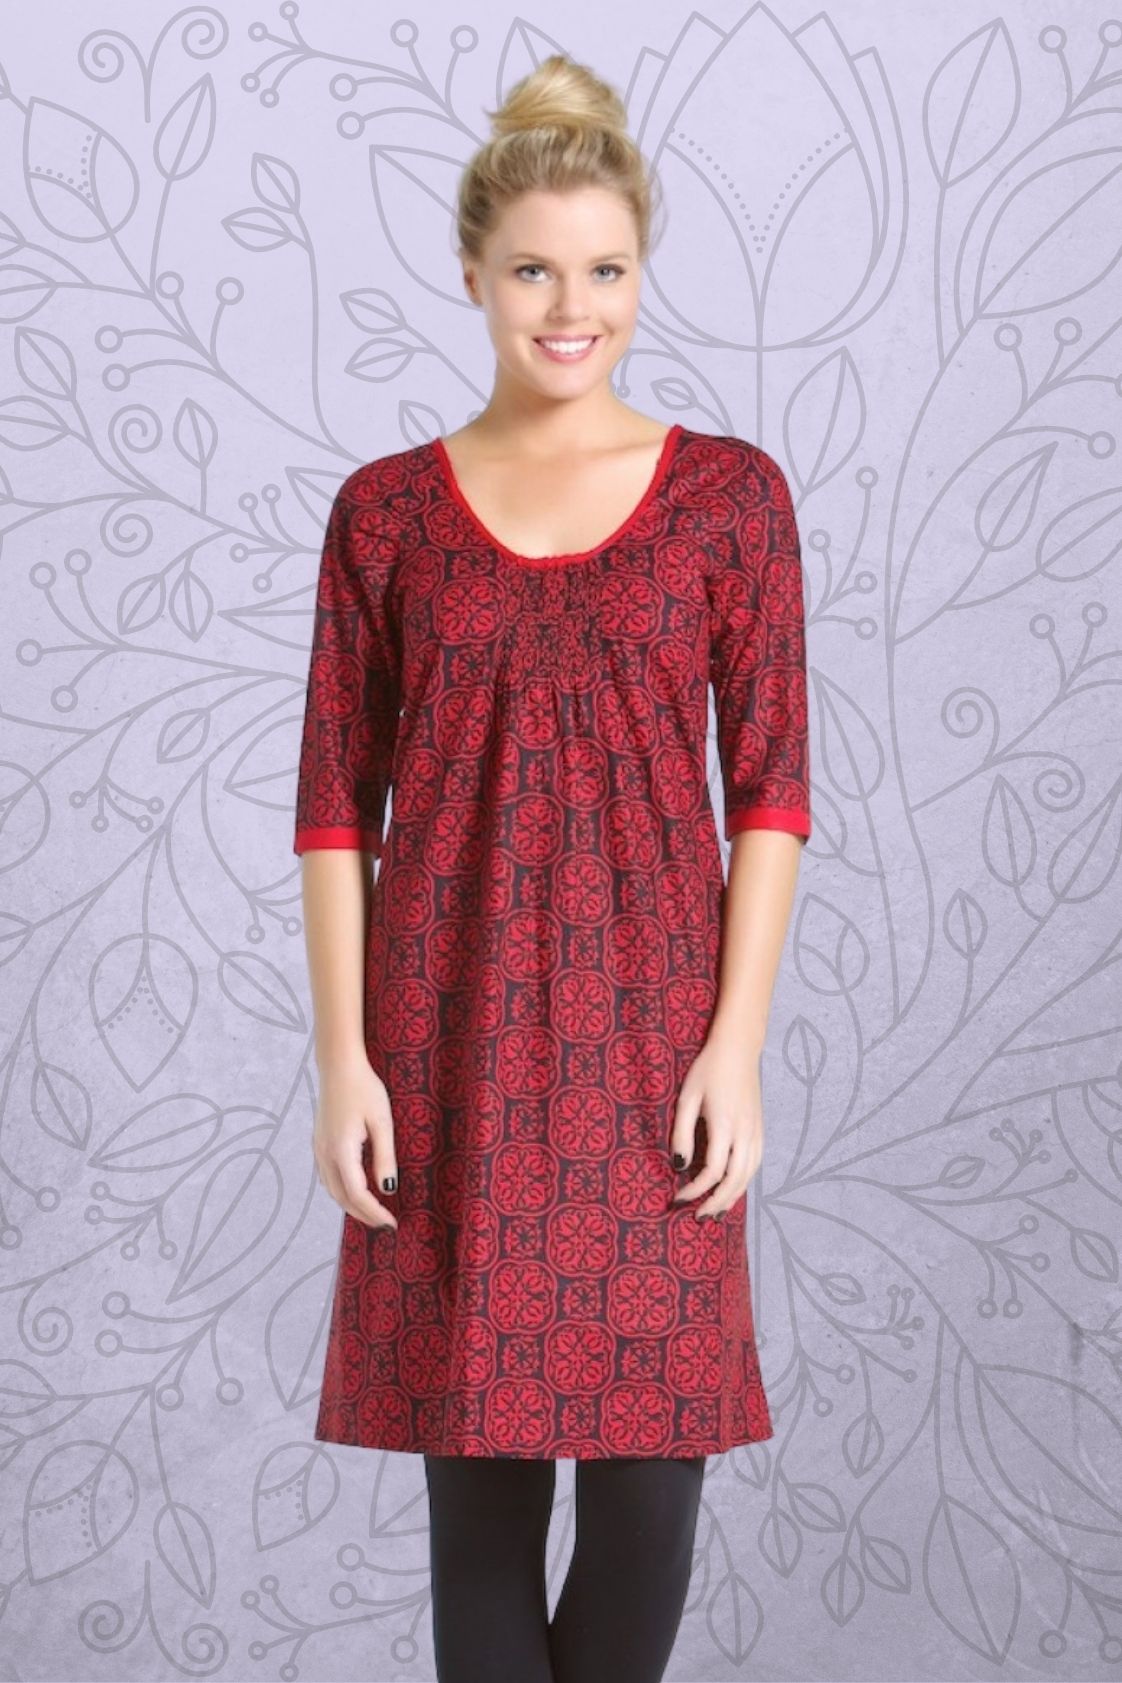 Samira Cotton Dress - Jodphur Print